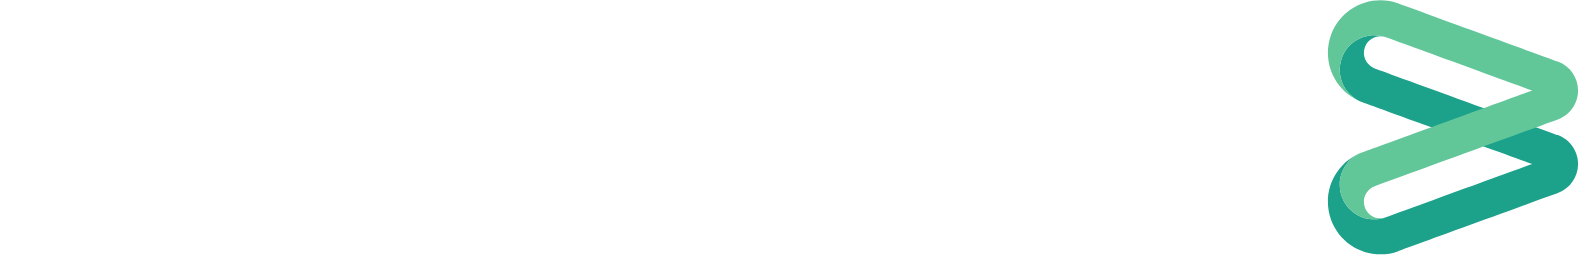 Baker Hughes
 Logo groß für dunkle Hintergründe (transparentes PNG)